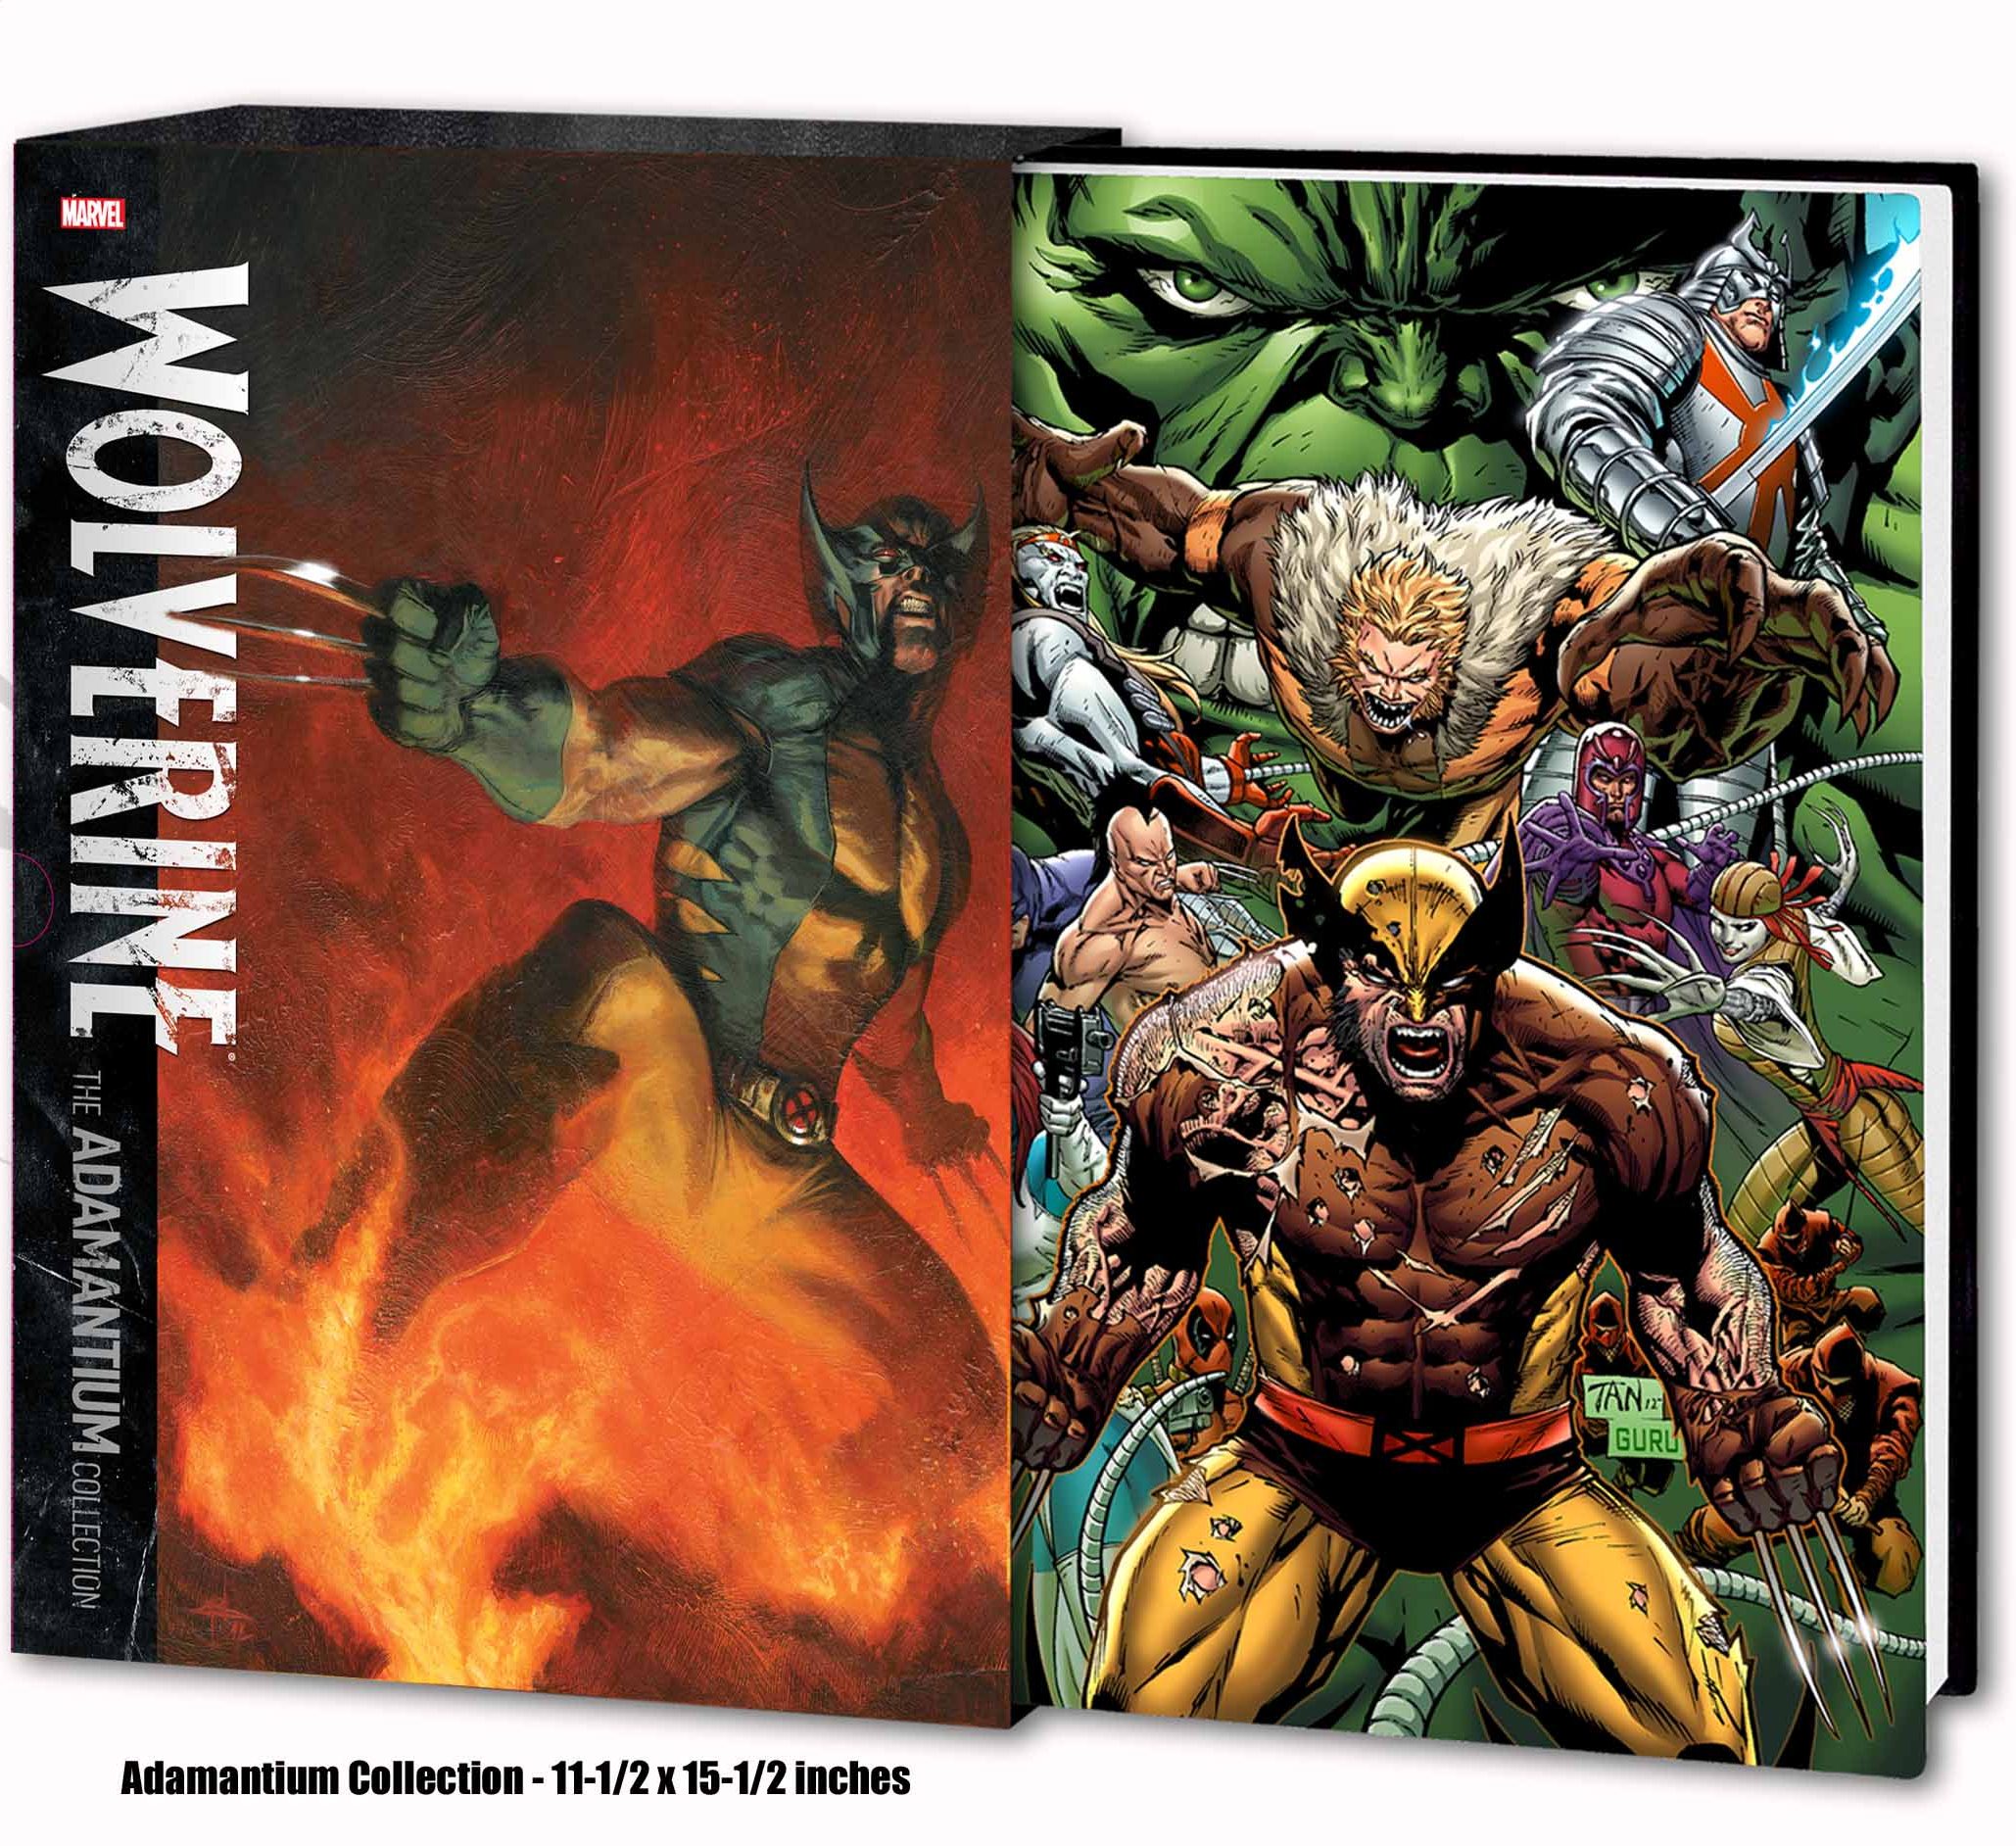 Wolverine: The Adamantium Collection (Hardcover)